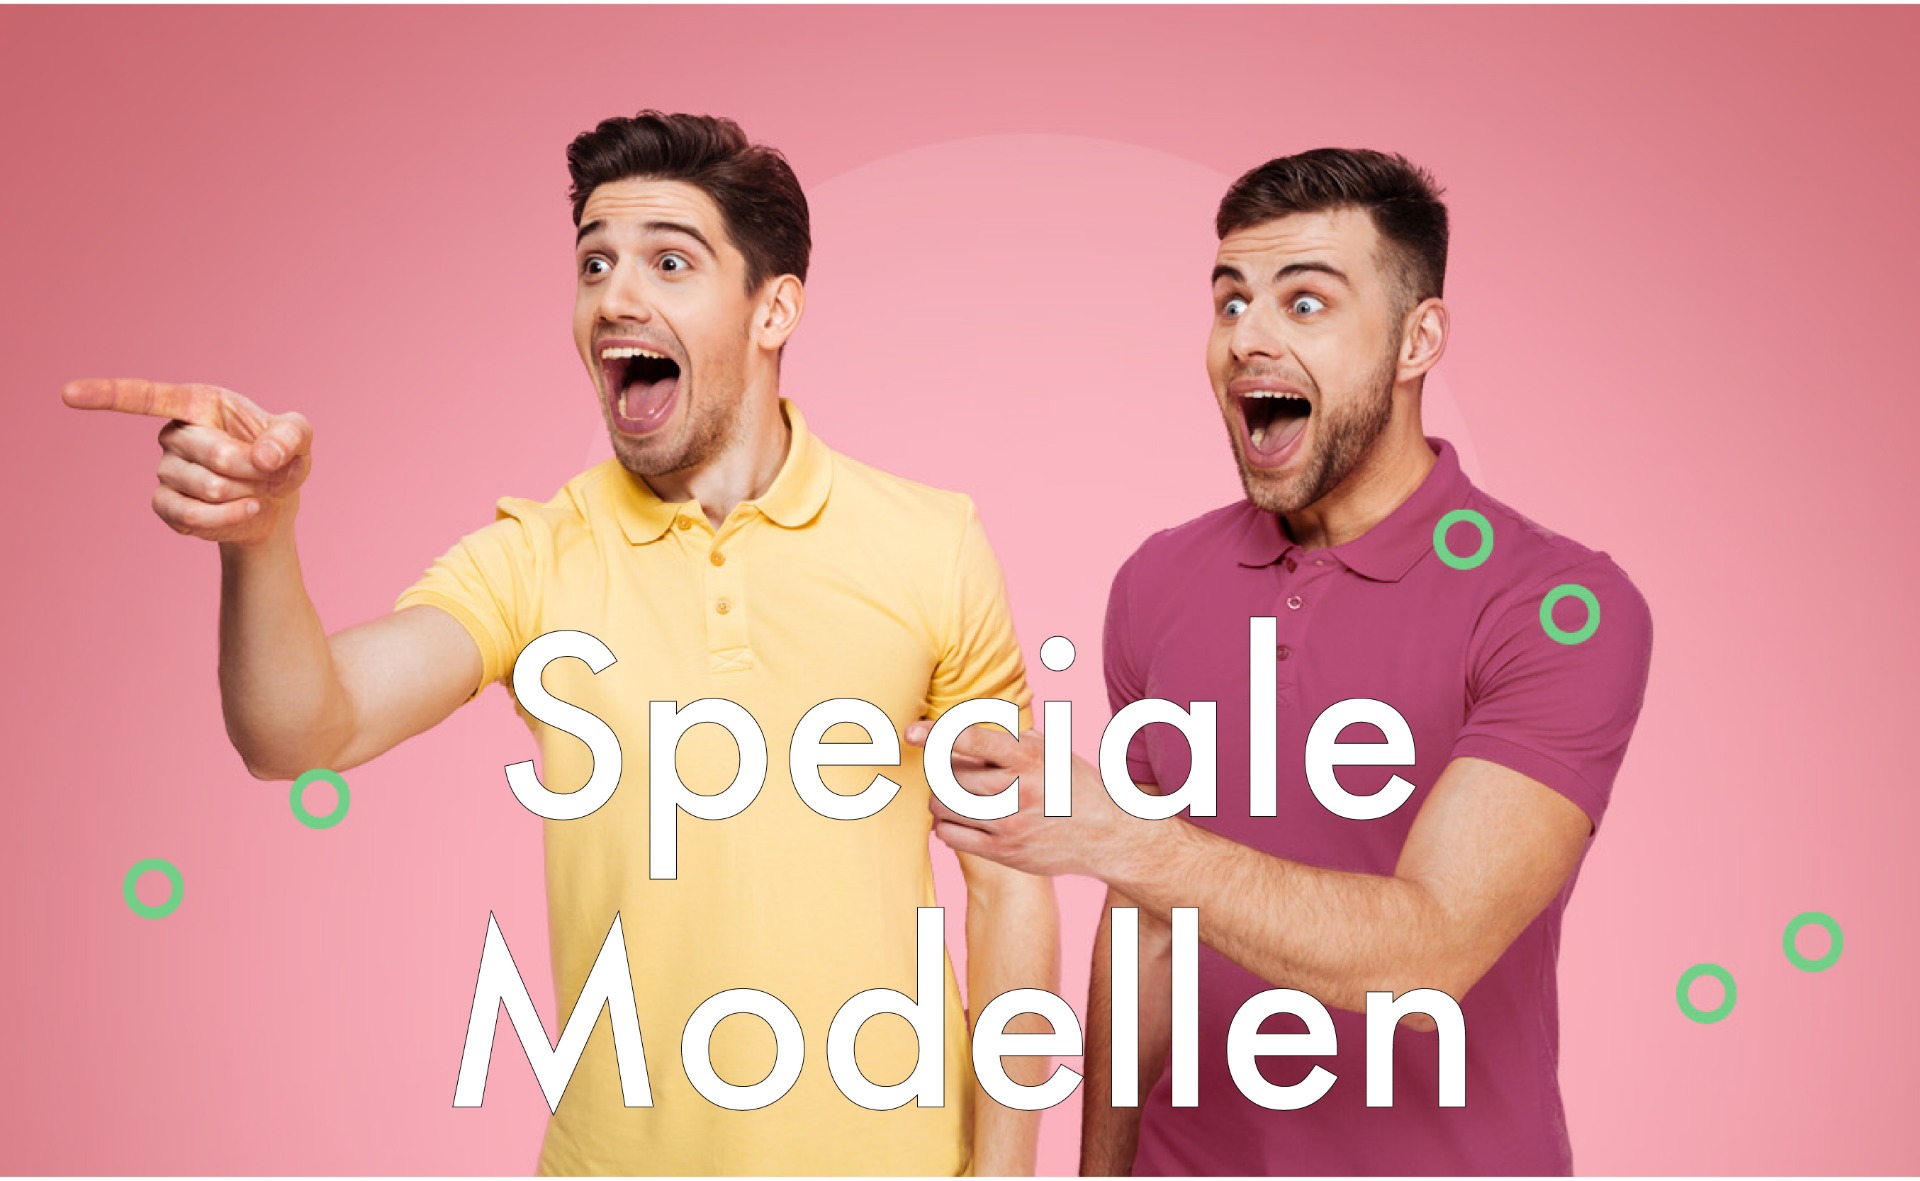 Speciale modellen